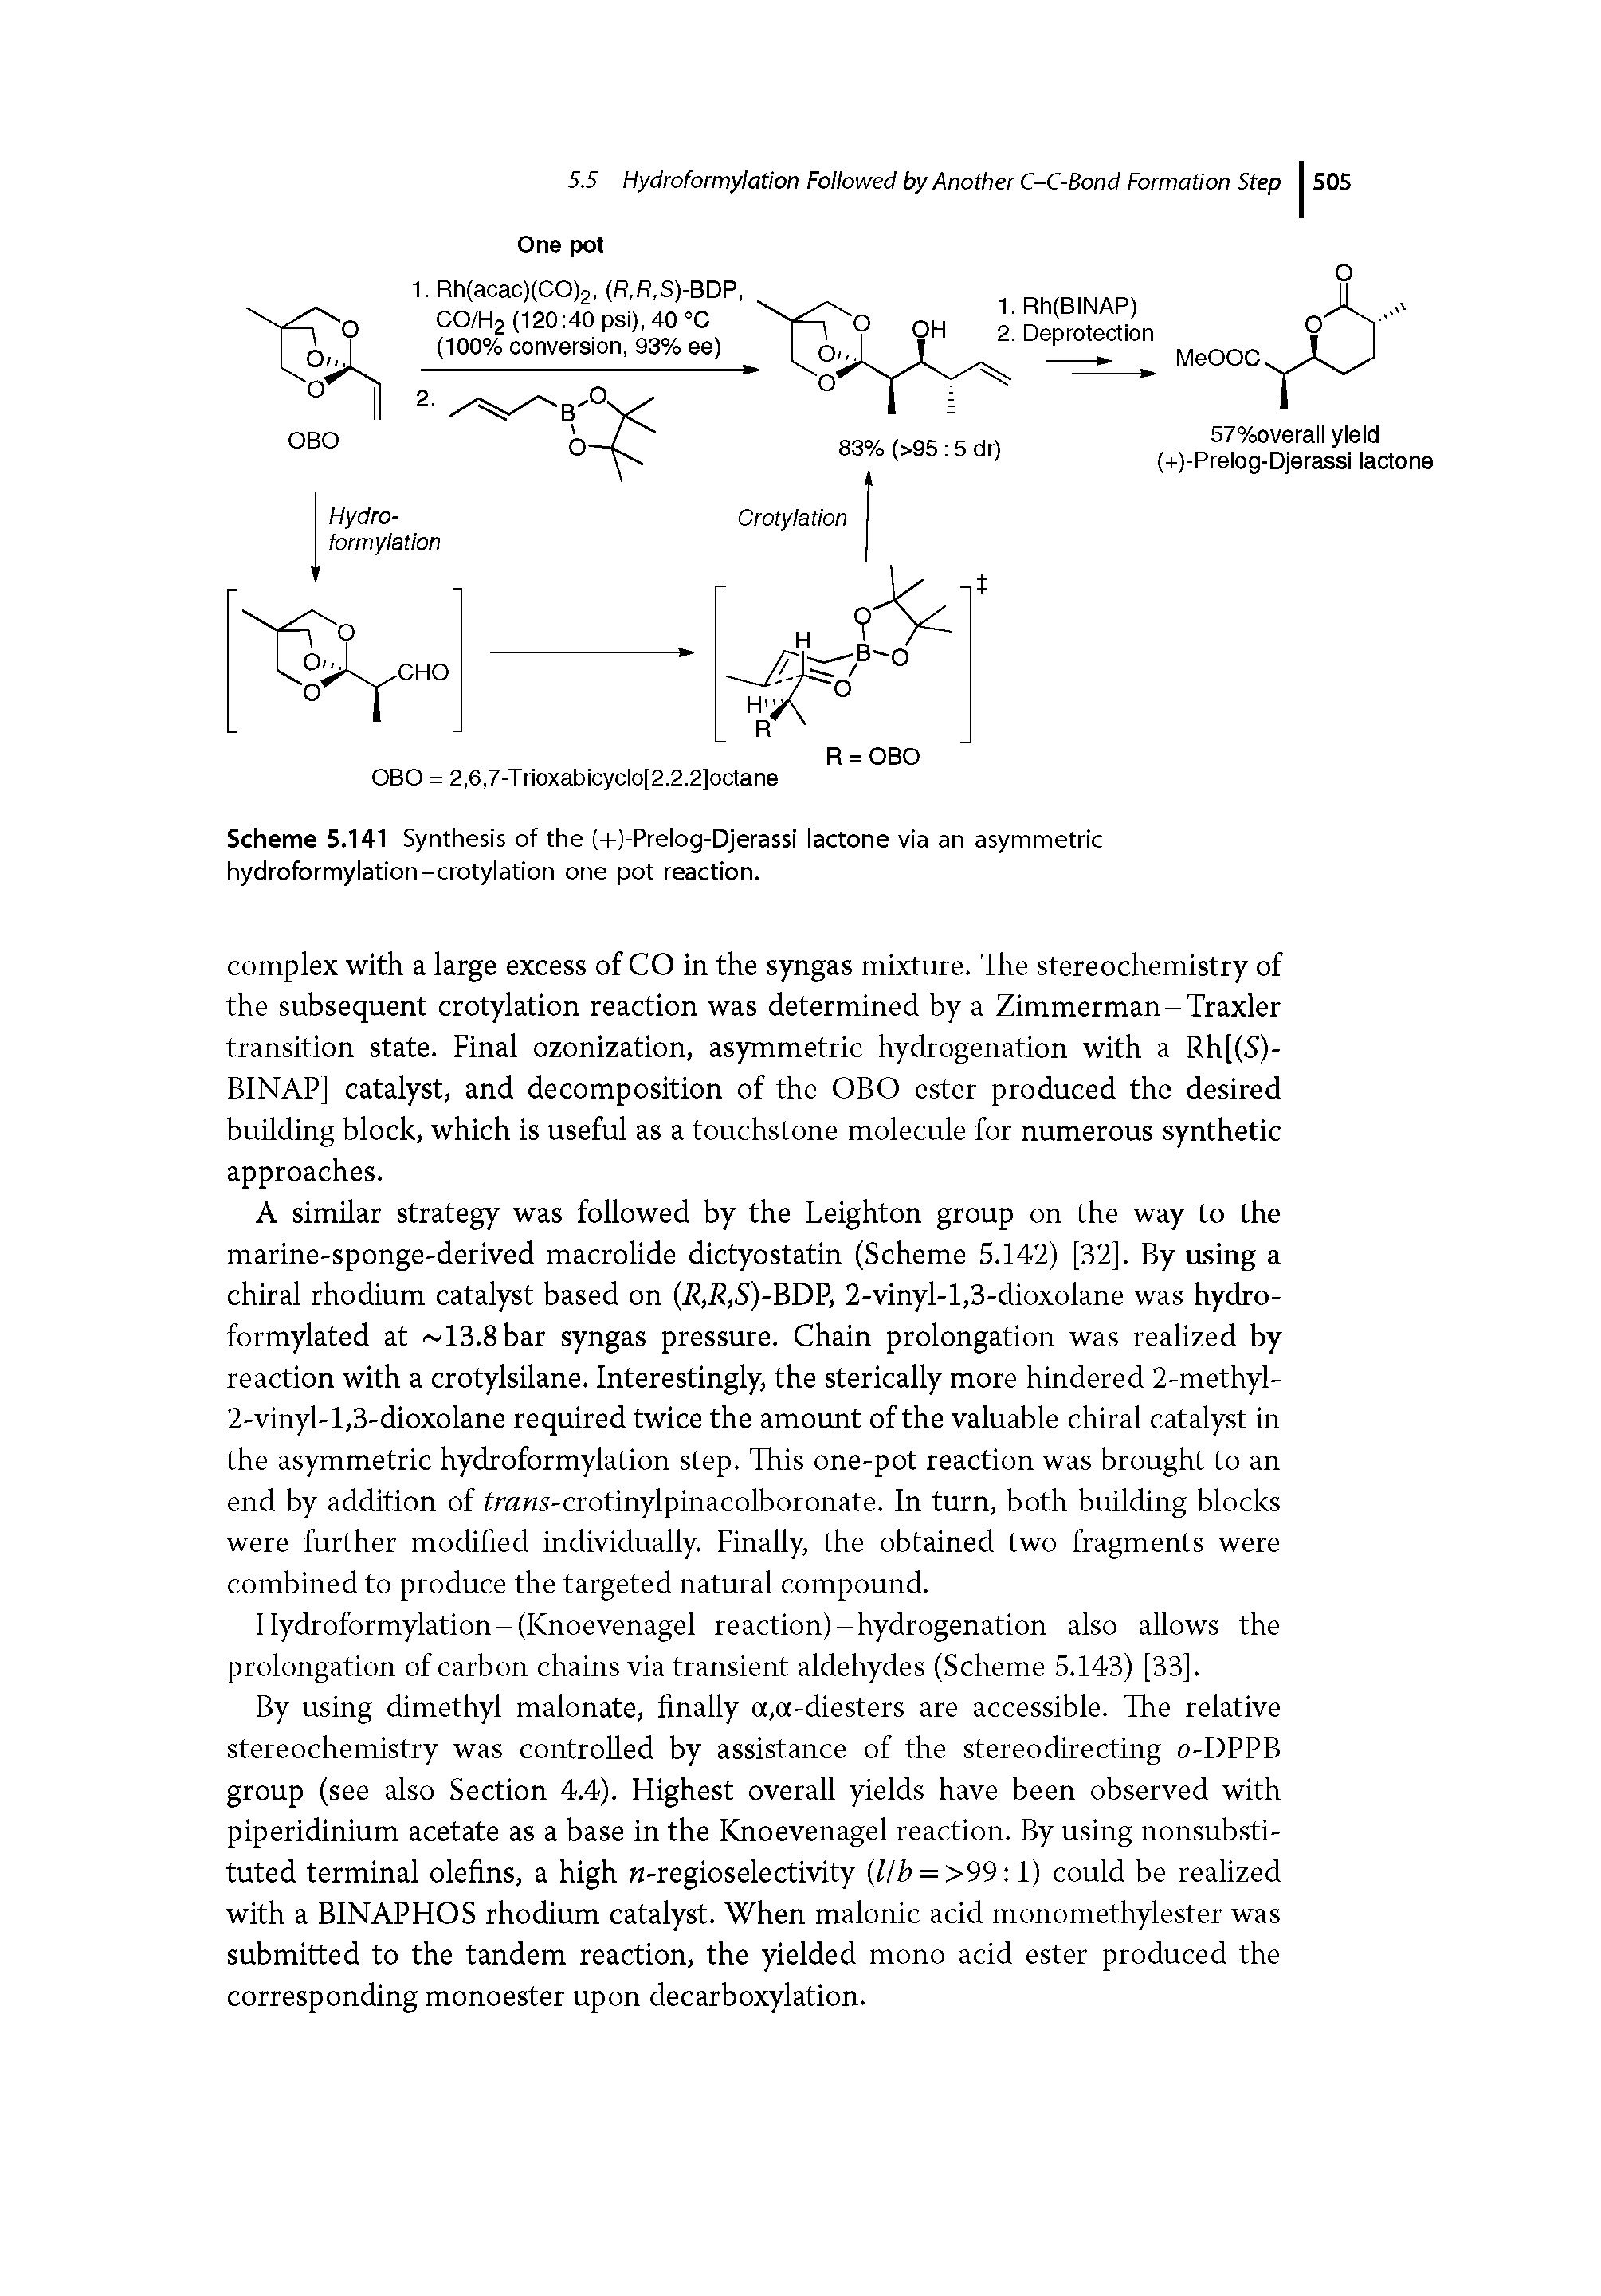 Scheme 5.141 Synthesis of the (+)-Prelog-Djerassi lactone via an asymmetric hydroformylation-crotylation one pot reaction.